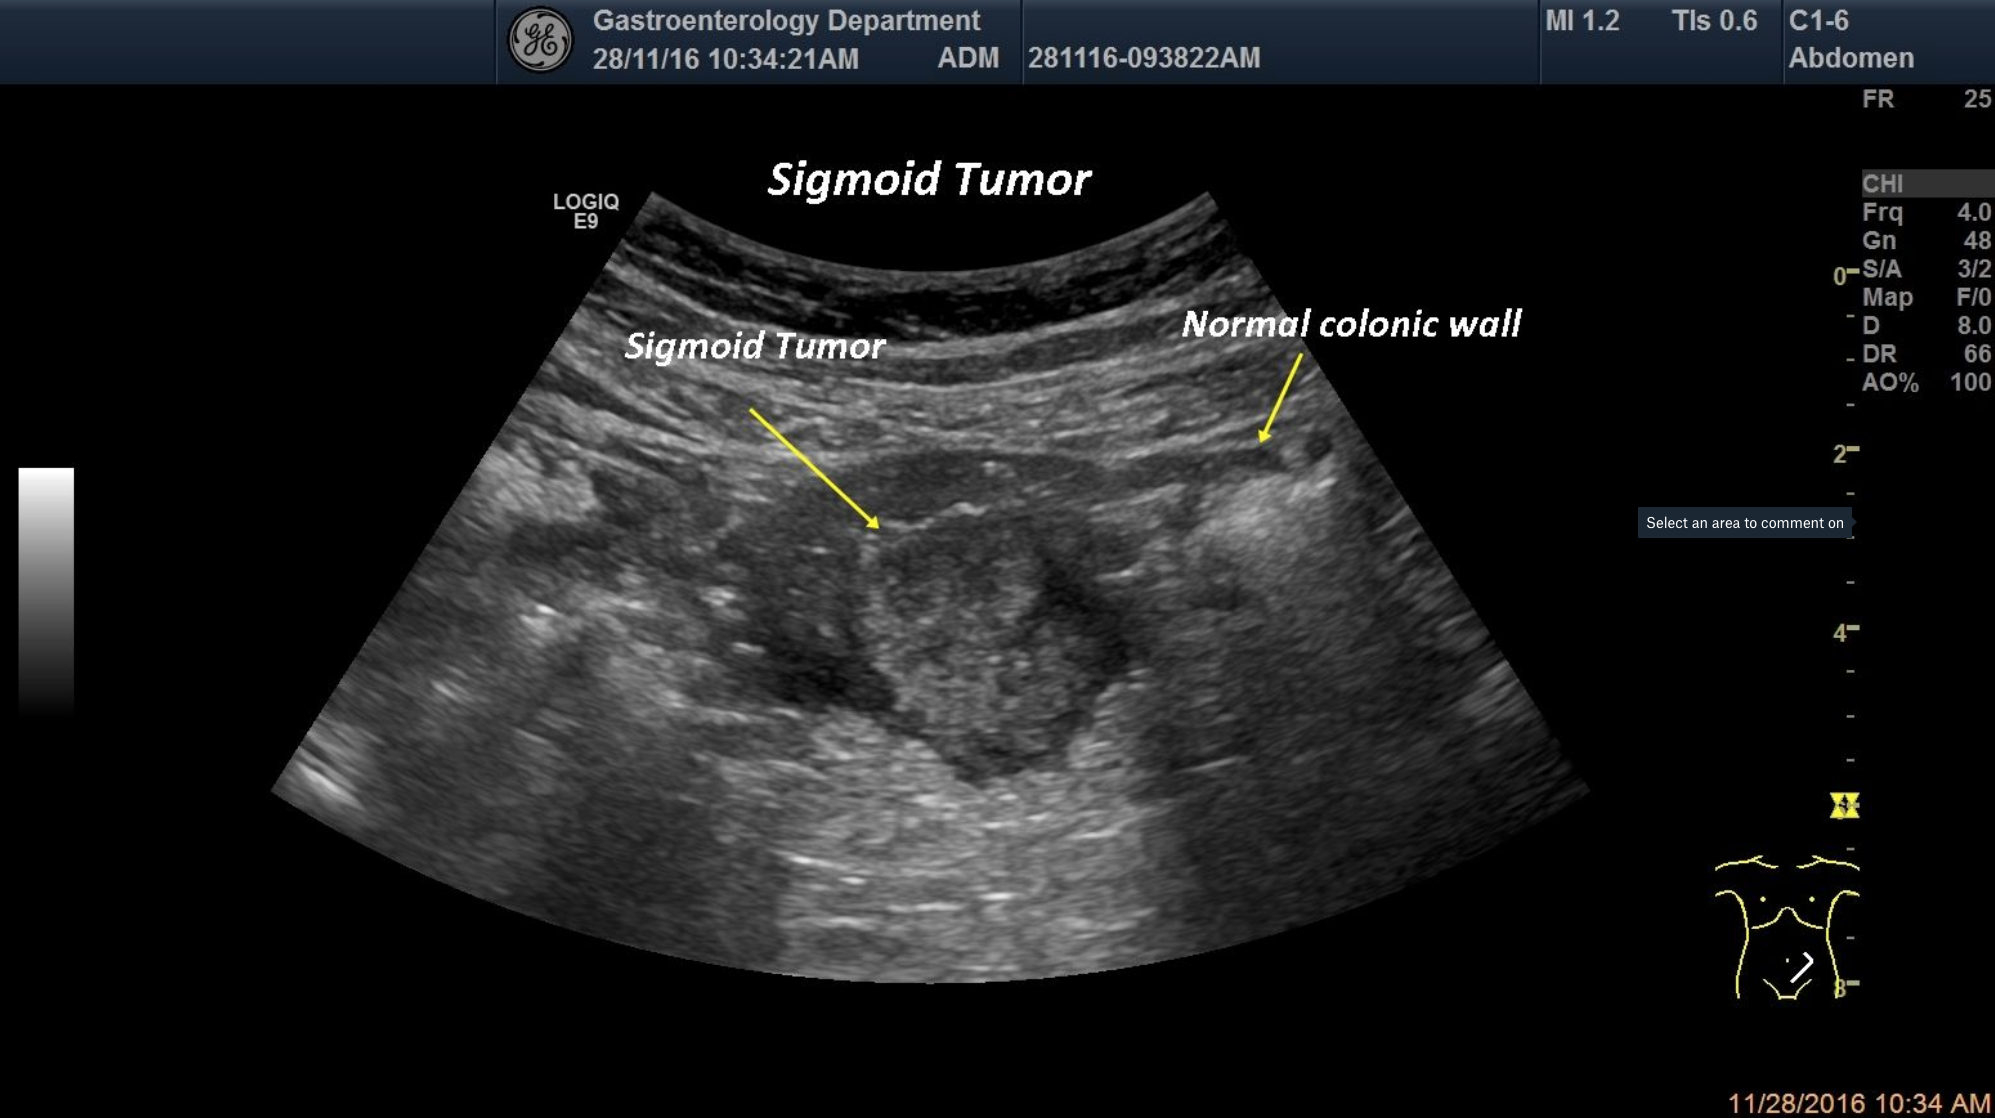 Sigmoid tumor [1 image]